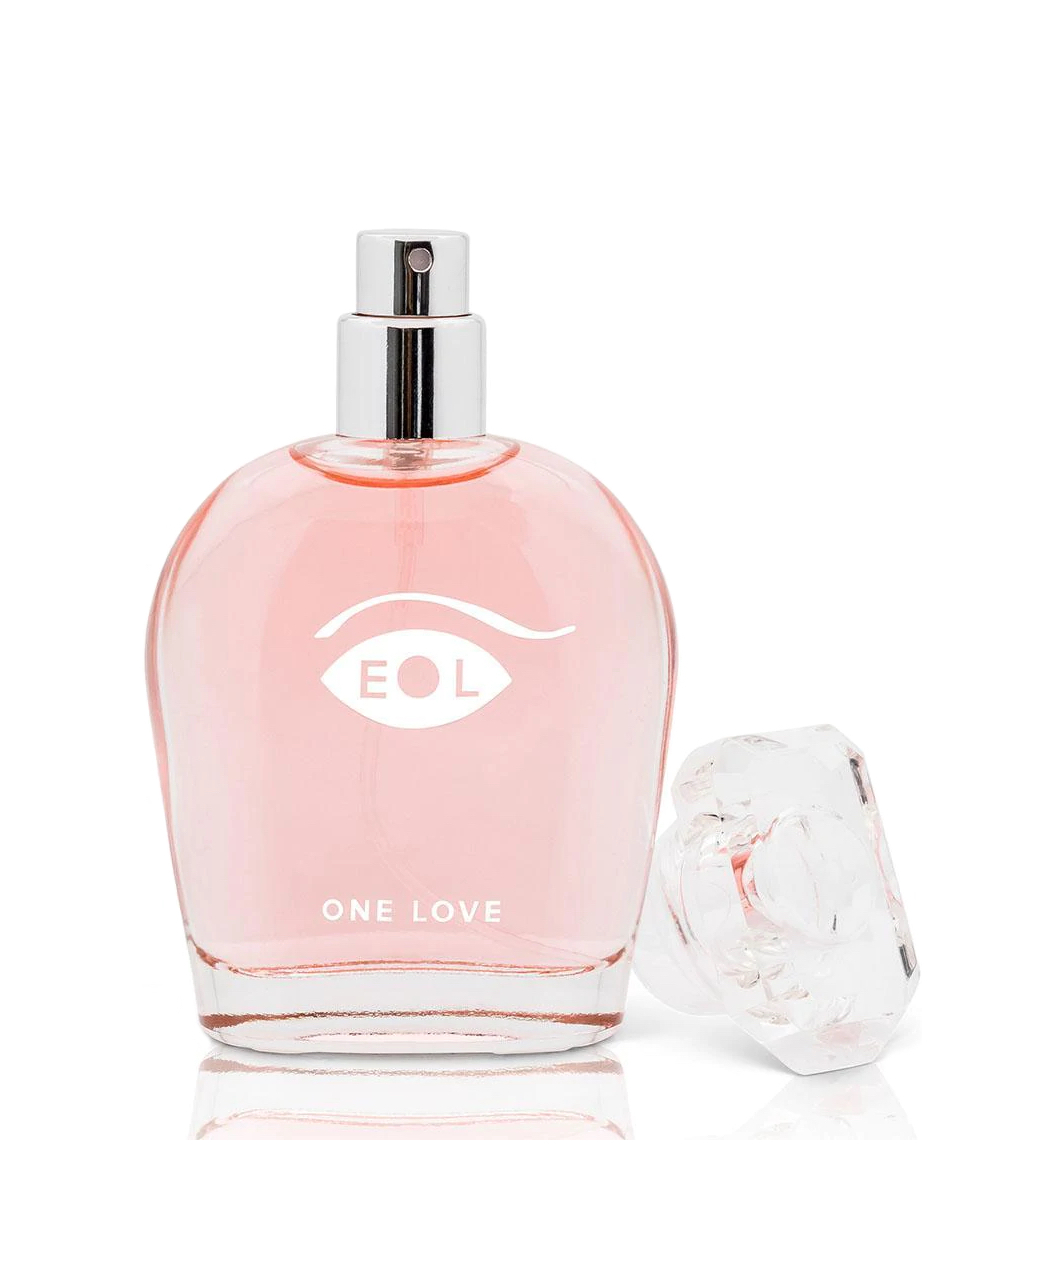 Eye Of Love One Love sieviešu smaržūdens ar feromoniem (10 / 50 ml)